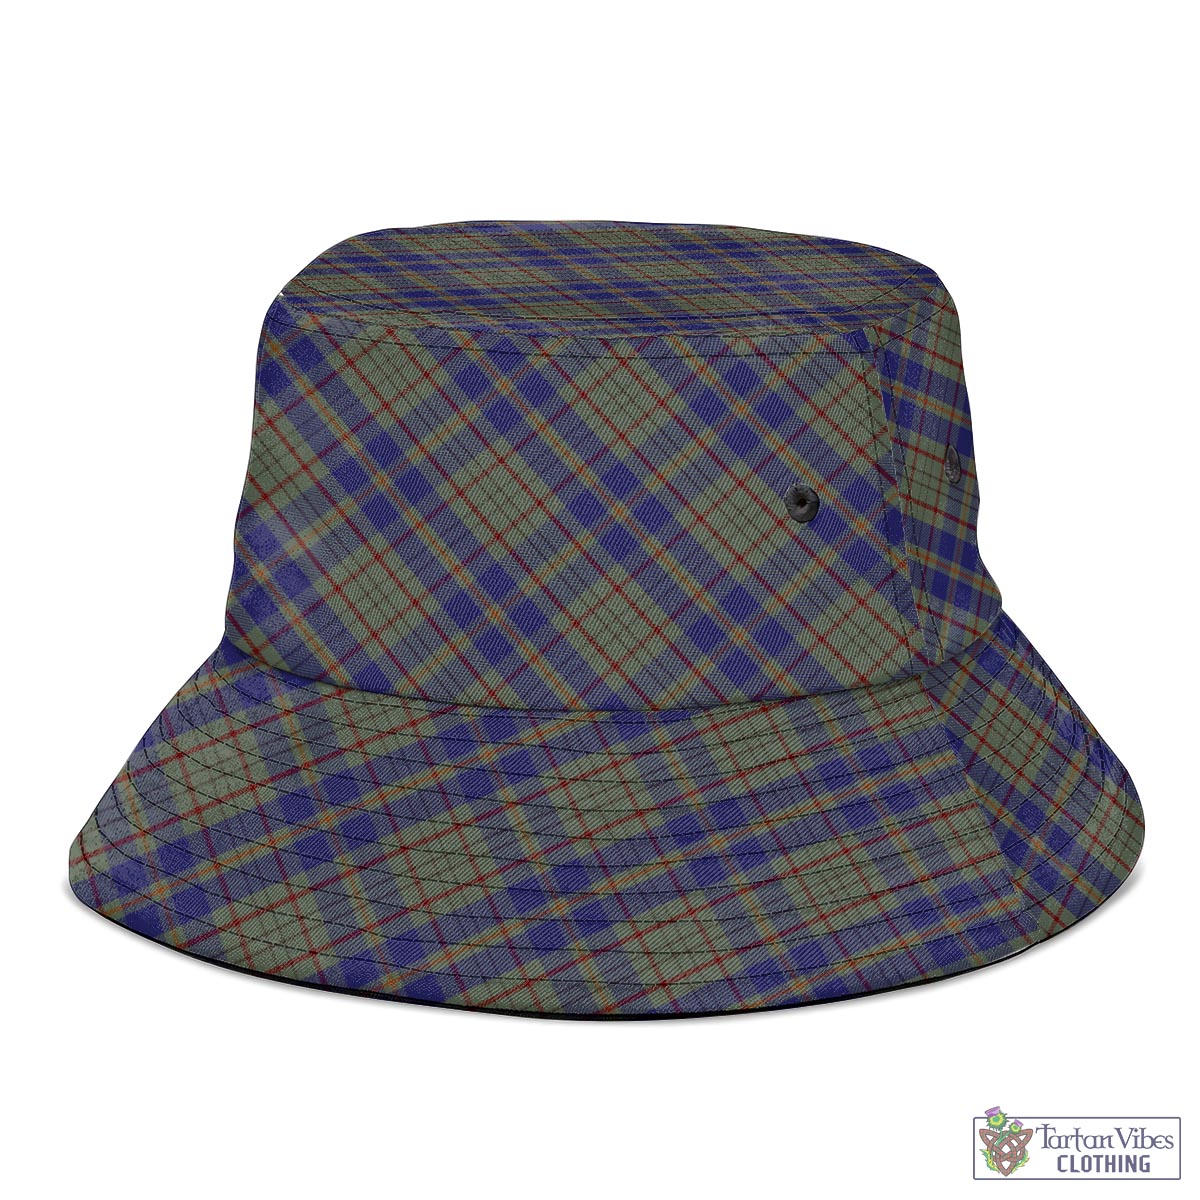 Tartan Vibes Clothing Kildare County Ireland Tartan Bucket Hat